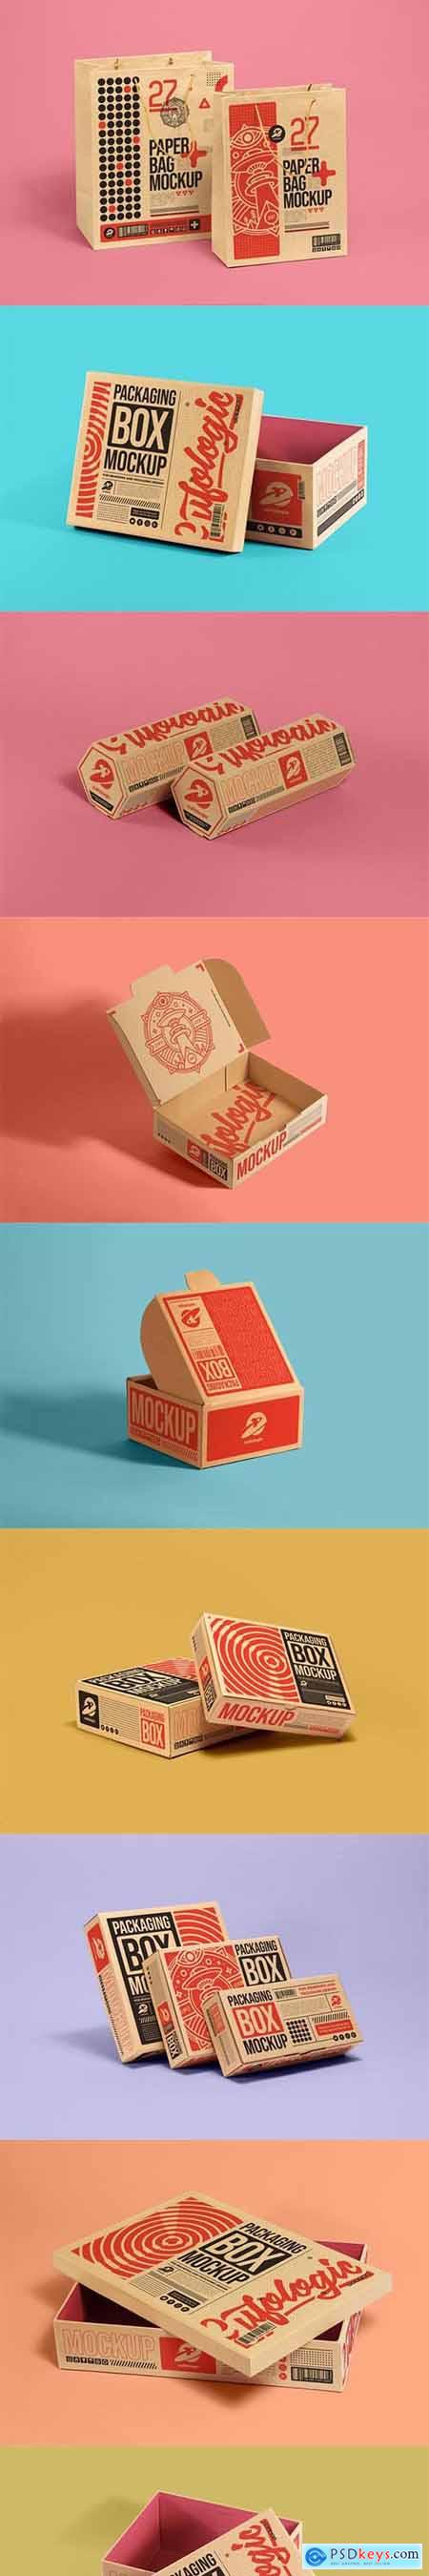 Packaging cardboard box mockup